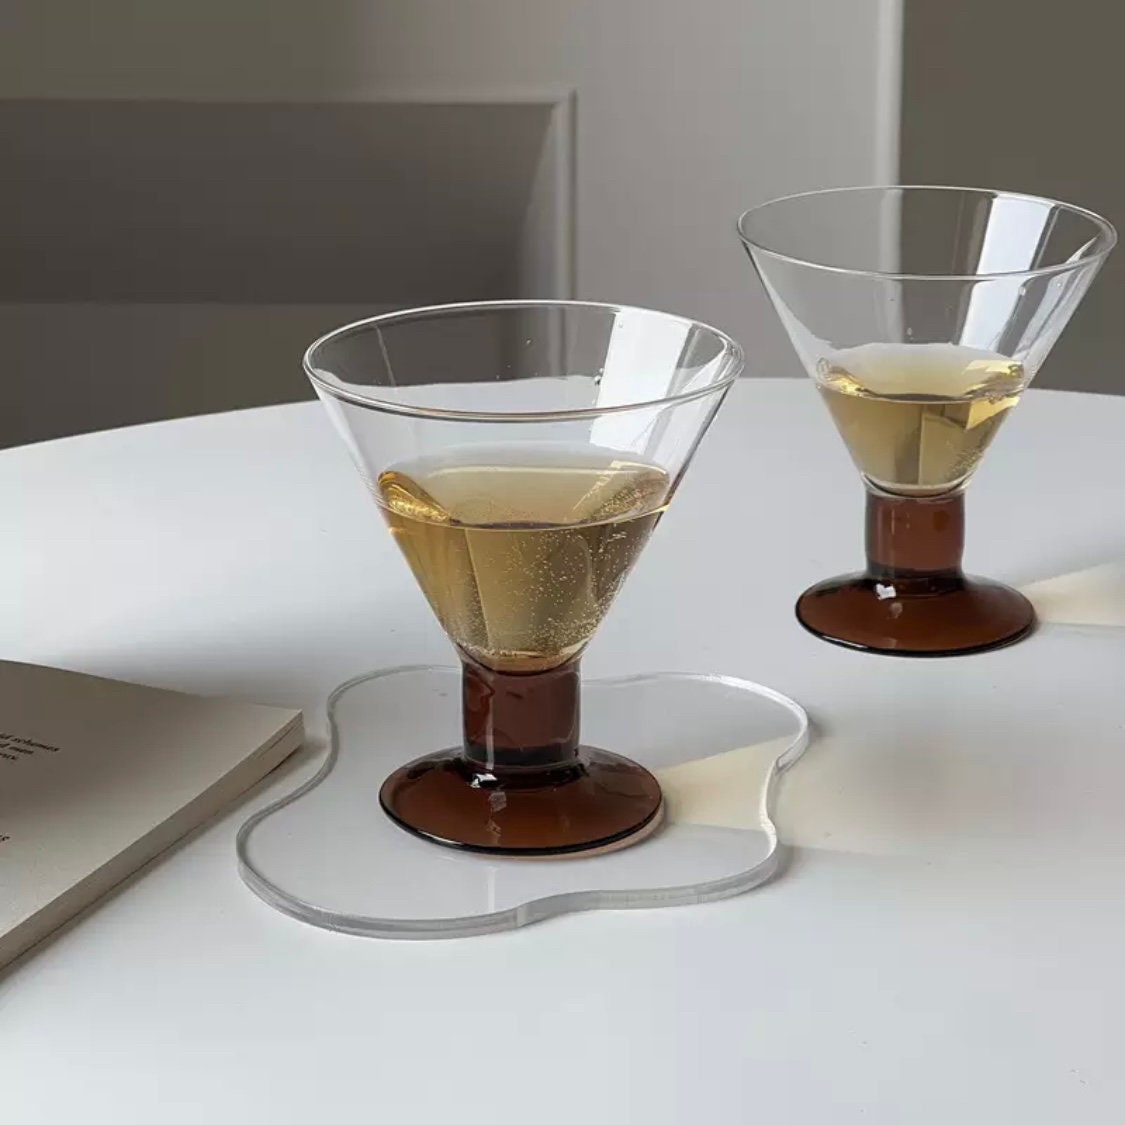 Elixir Glassware Stemless Martini Glasses Set of 4 - Hand Blown Crystal  Martini Glasses - Elegant Cocktail Glasses for Bar - 9oz, Clear